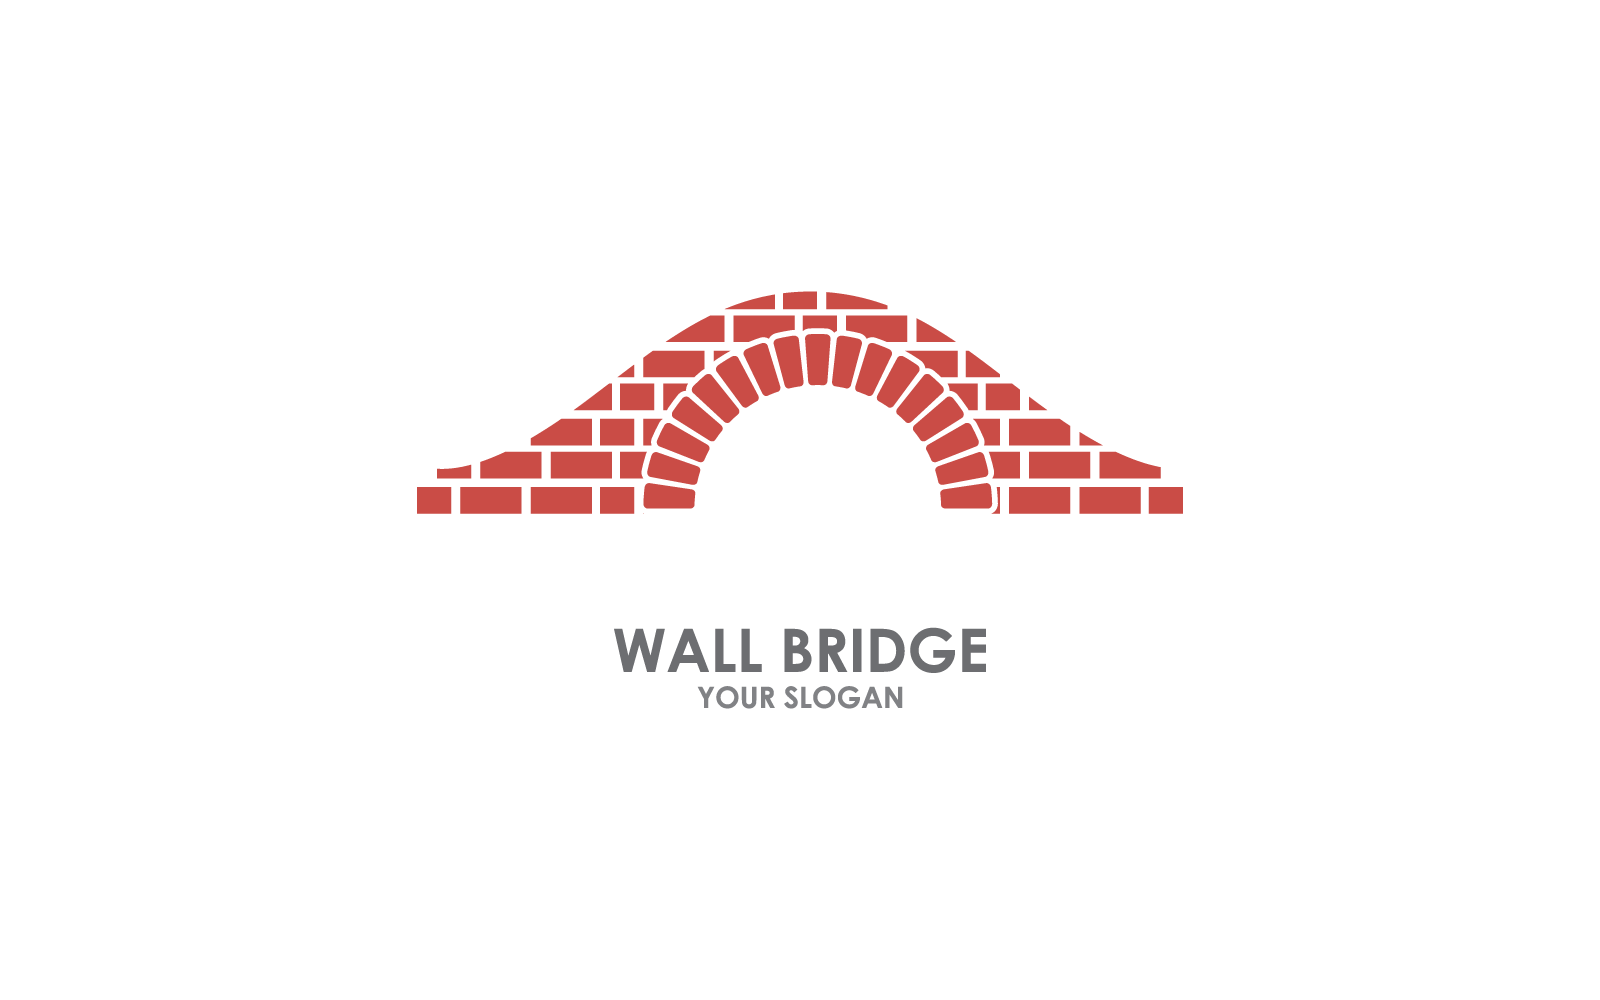 Wall bridge logo illustration vector flat design